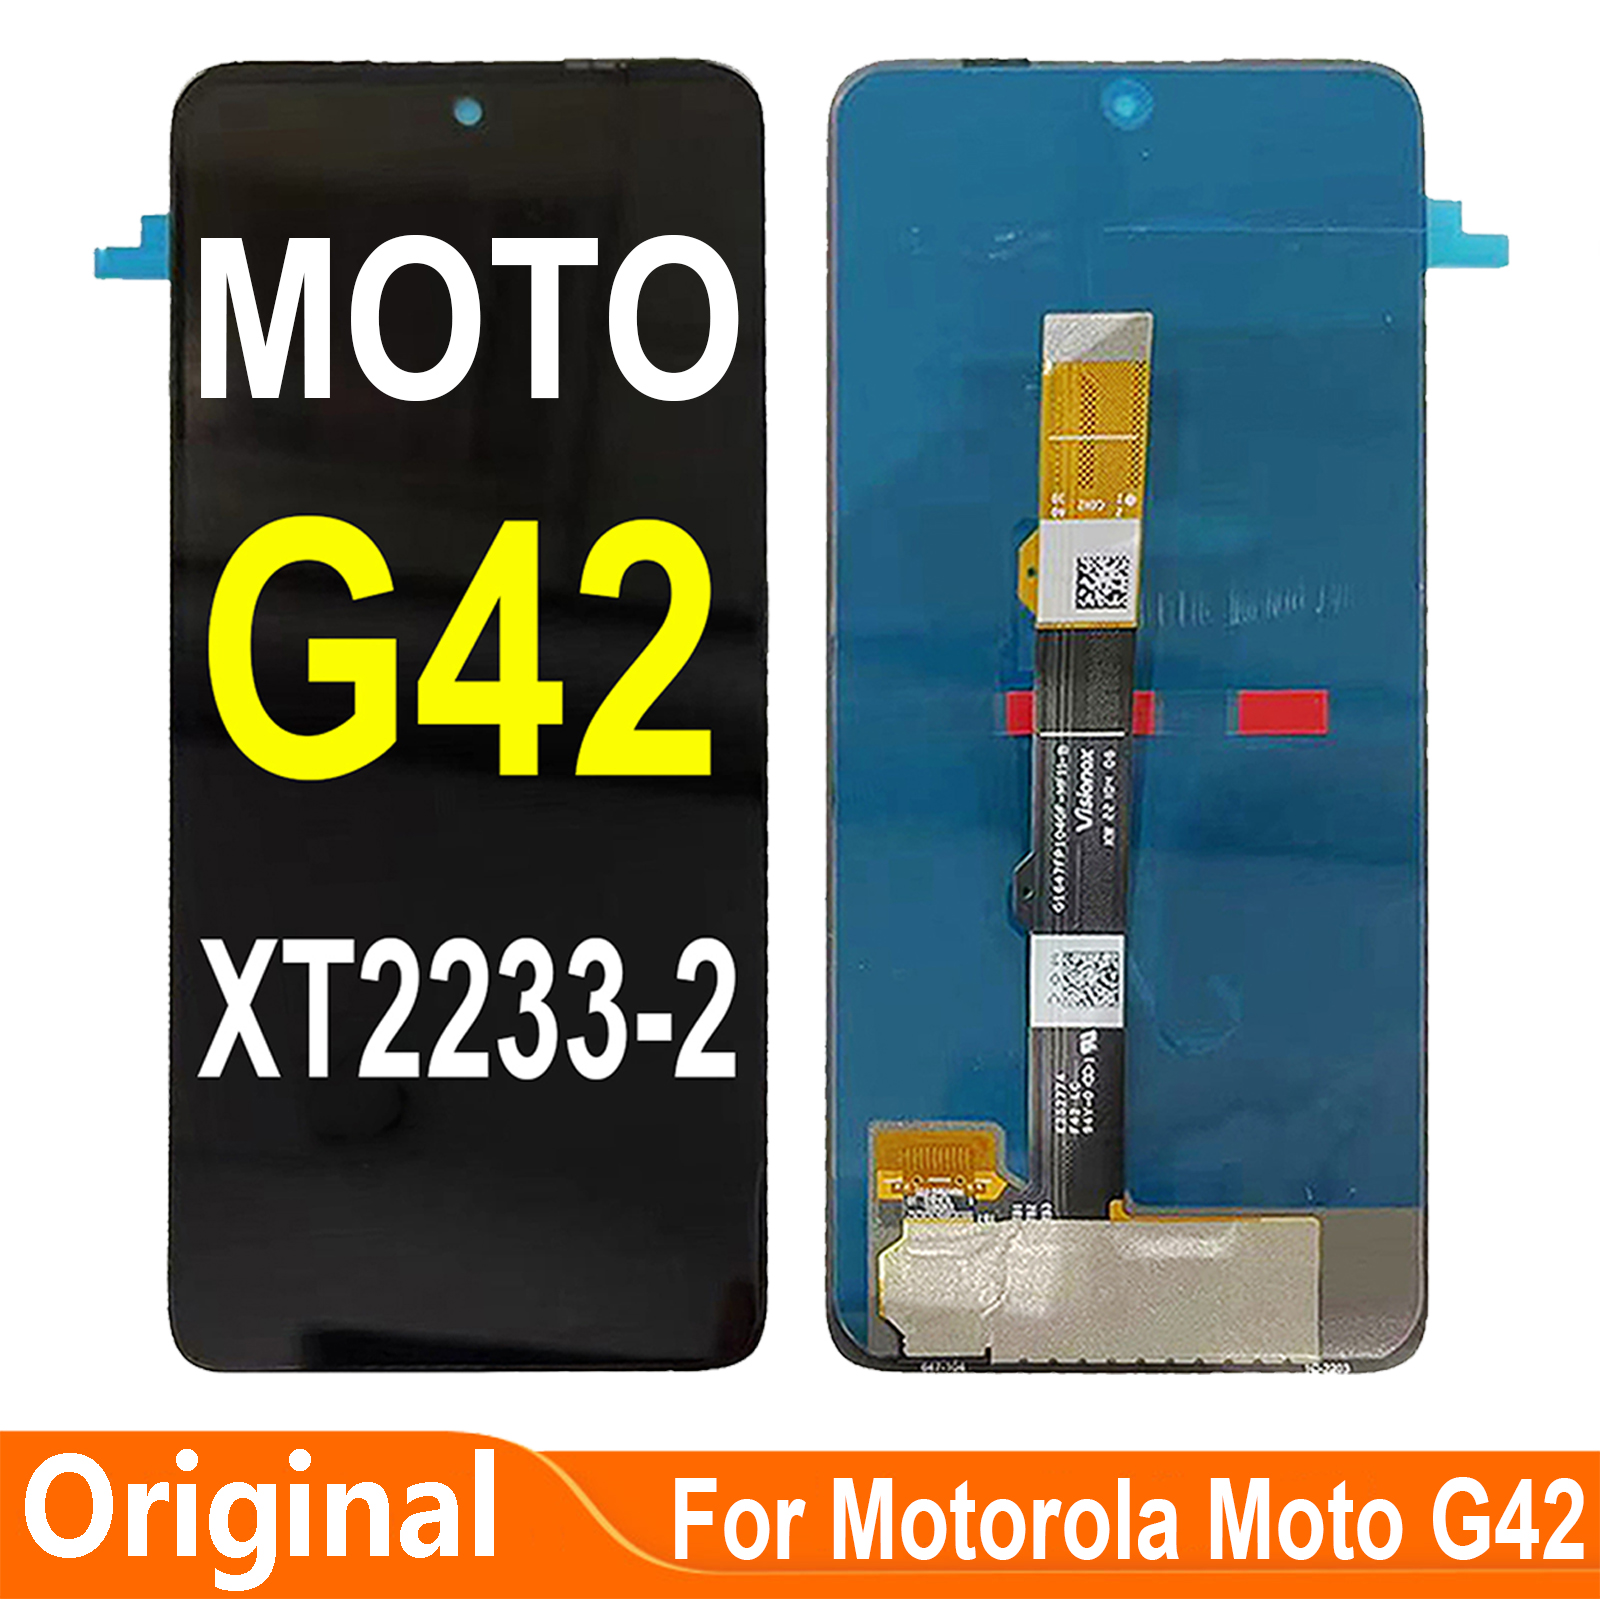 Original-6-4-For-Motorola-Moto-G42-XT2233-2-MotoG42-LCD-Display-Touch-Screen-Digitizer-Assembly